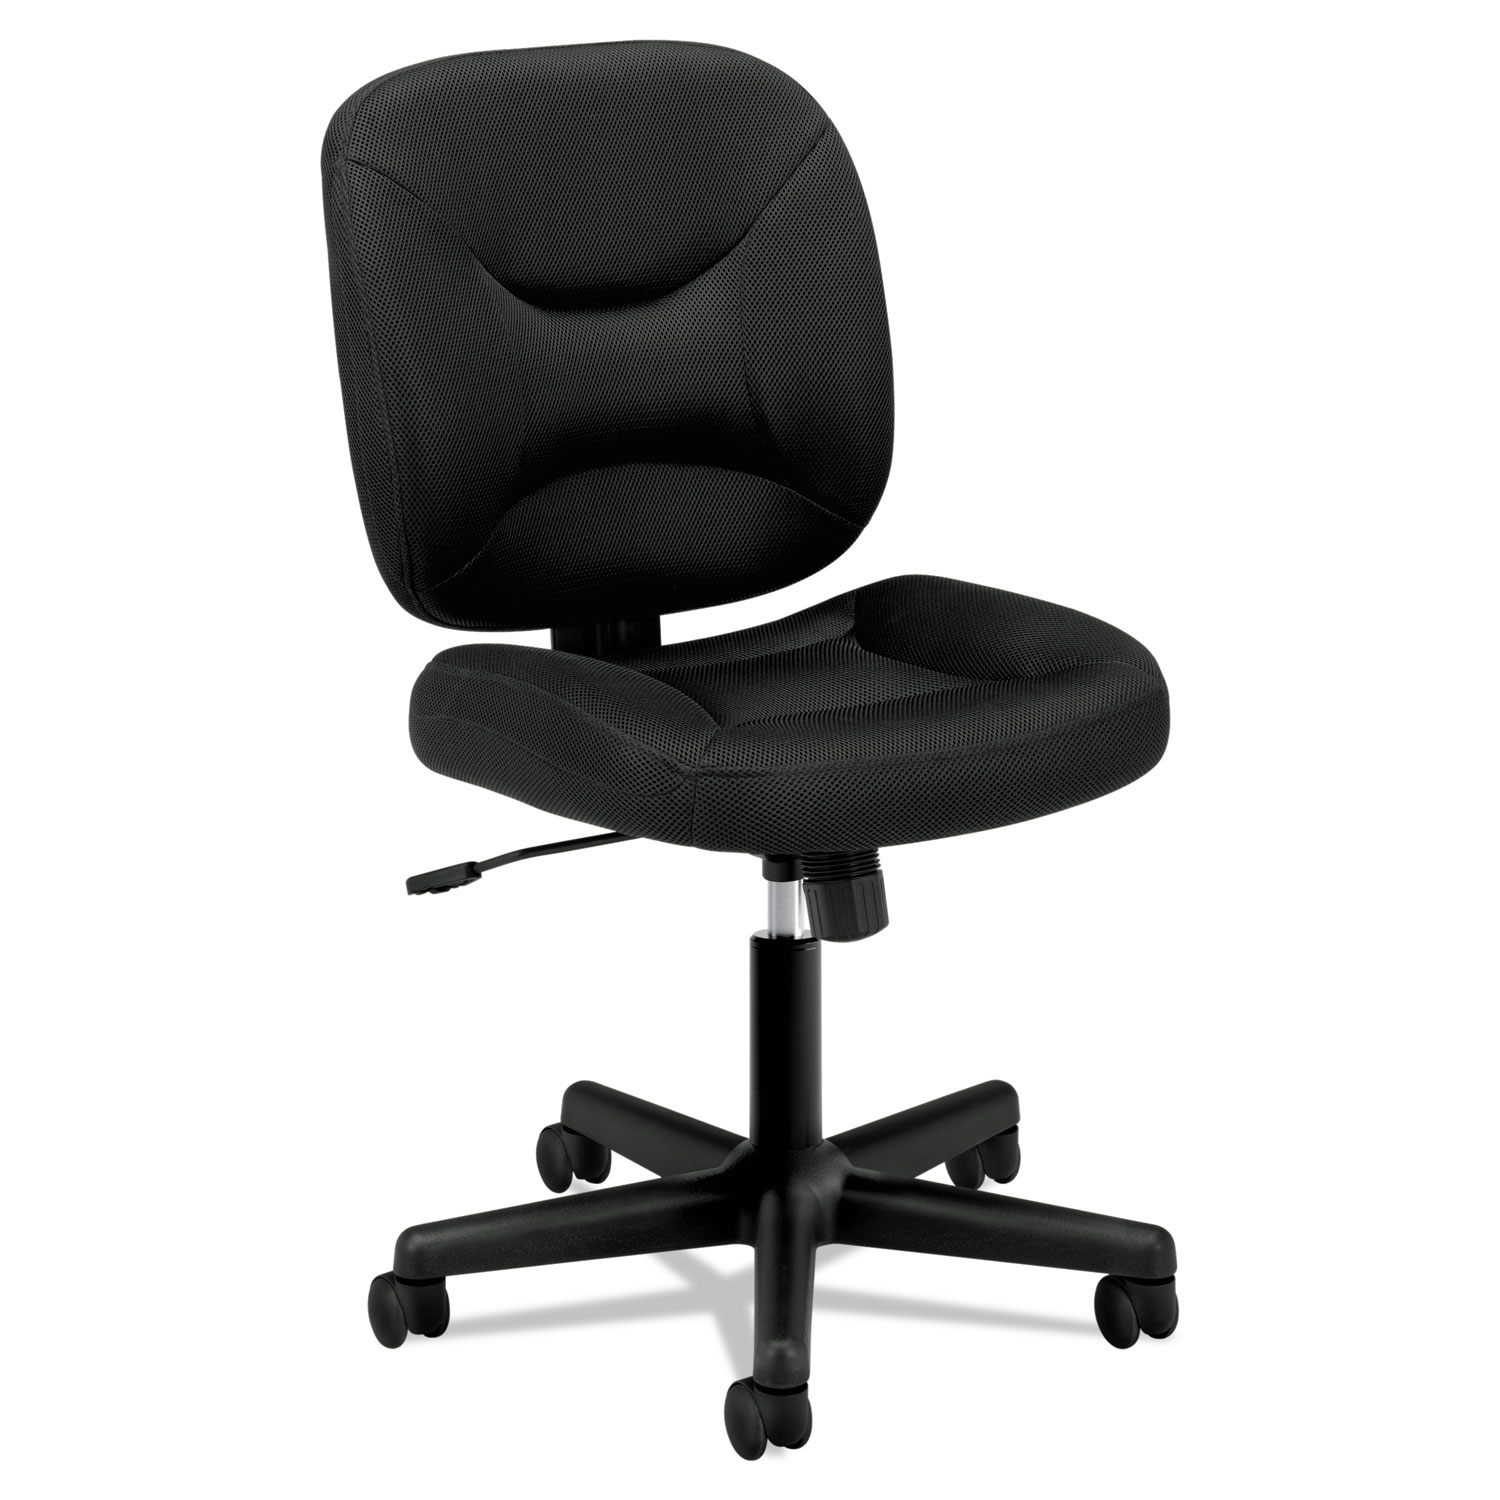  HON HVL210.MM10 VL210 Low-Back Task Chair, Supports up to 250 lbs., Black Seat/Black Back, Black Base (BSXVL210MM10) 